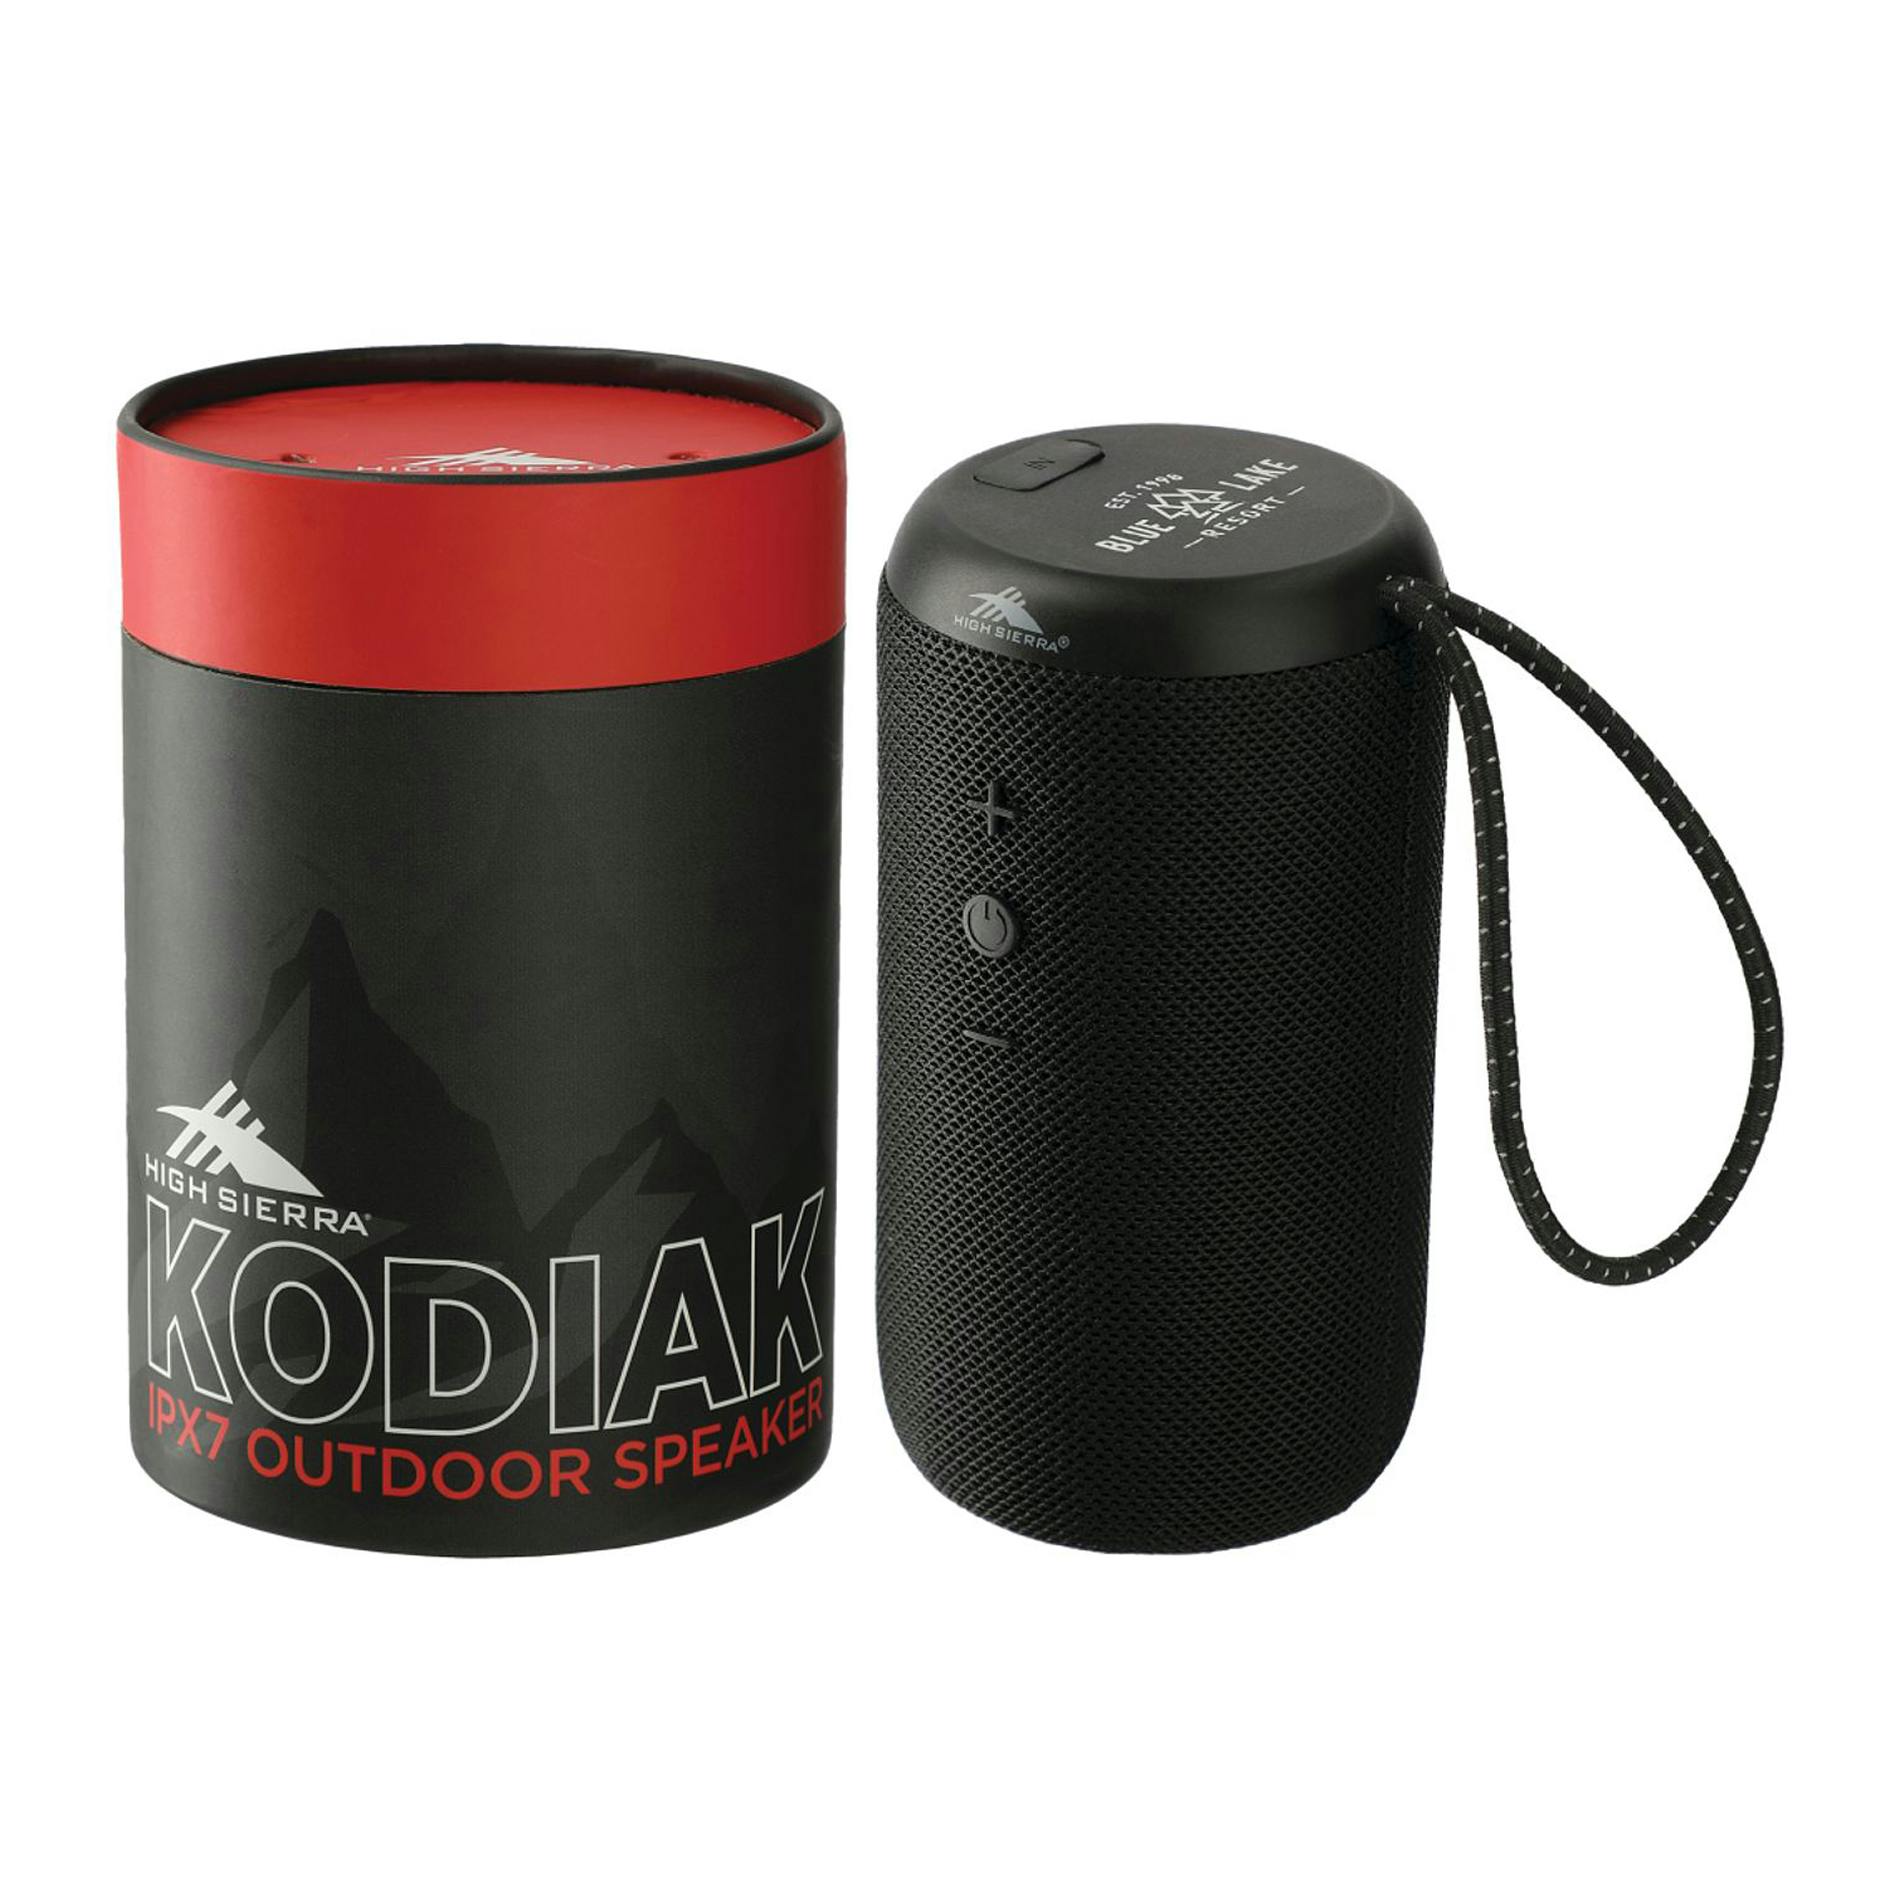 High Sierra Kodiak IPX7 Outdoor Bluetooth Speaker - additional Image 5